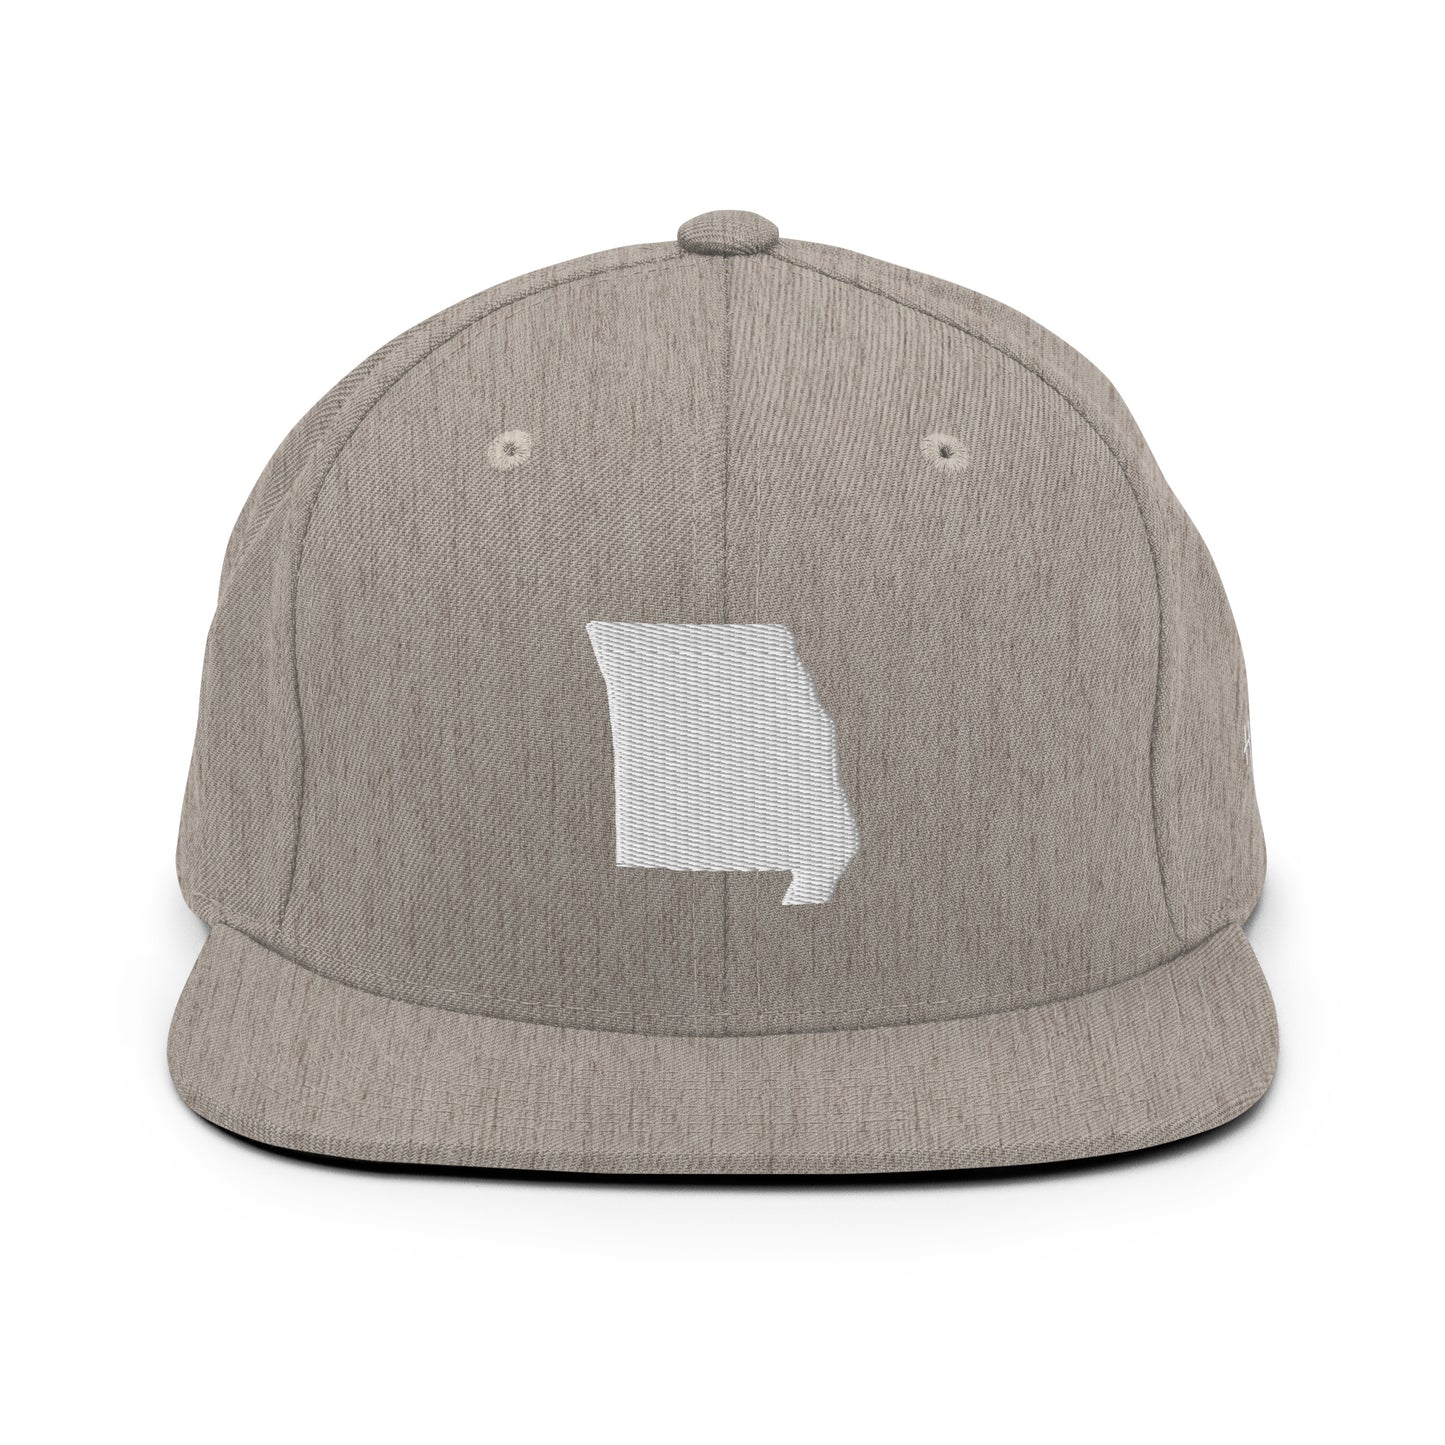 Missouri State Silhouette 6 Panel Snapback Hat